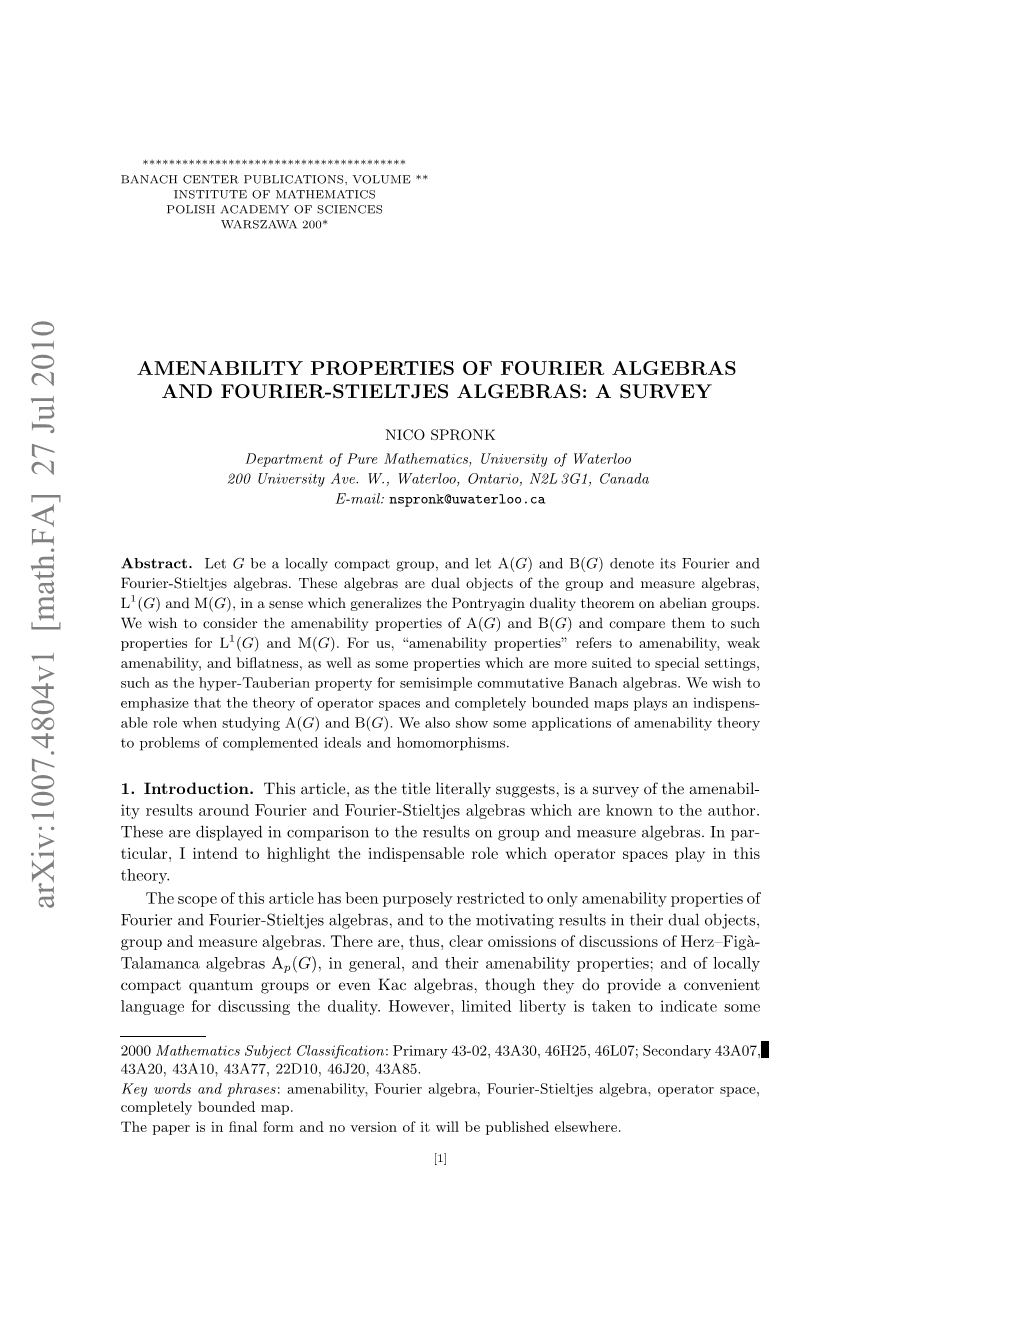 Amenability Properties of Fourier Algebras and Fourier-Stieltjes Algebras: a Survey